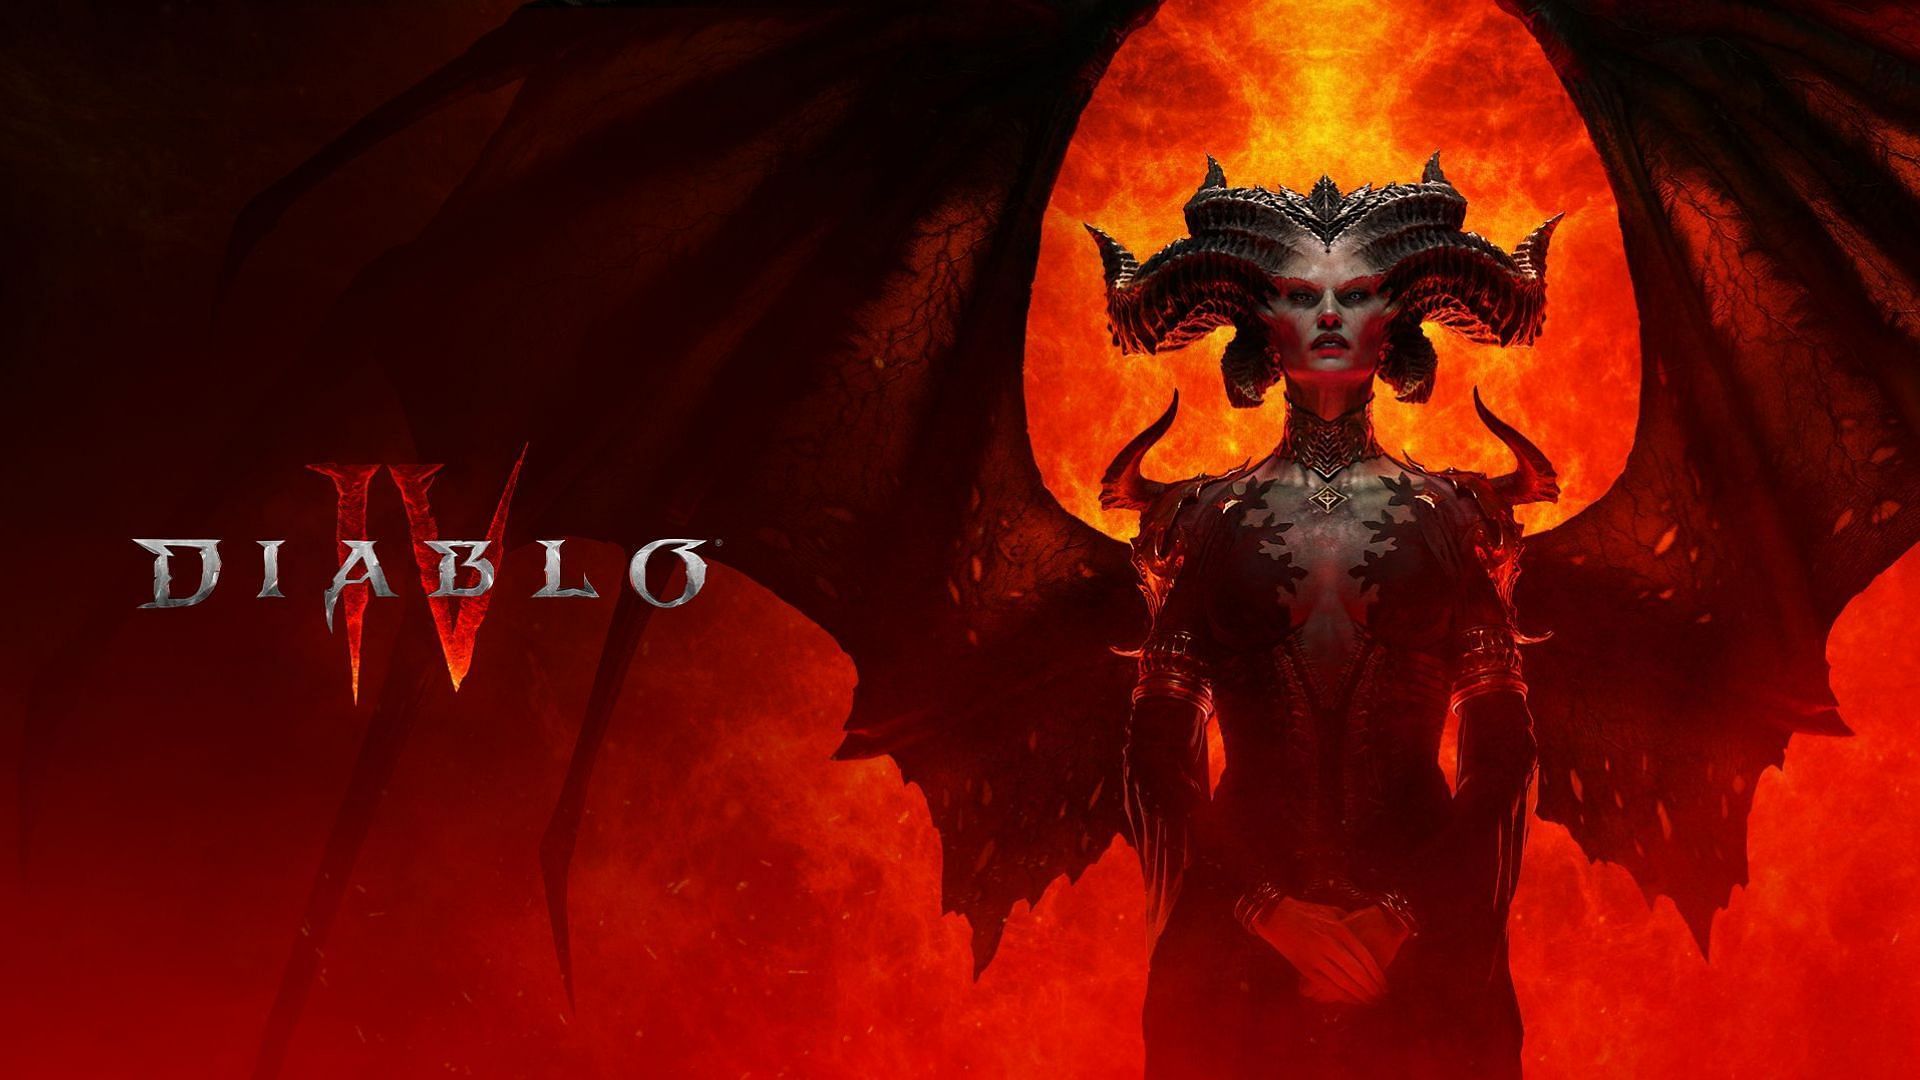 Diablo IV is an action MMORPG (Image via Blizzard Entertainment)